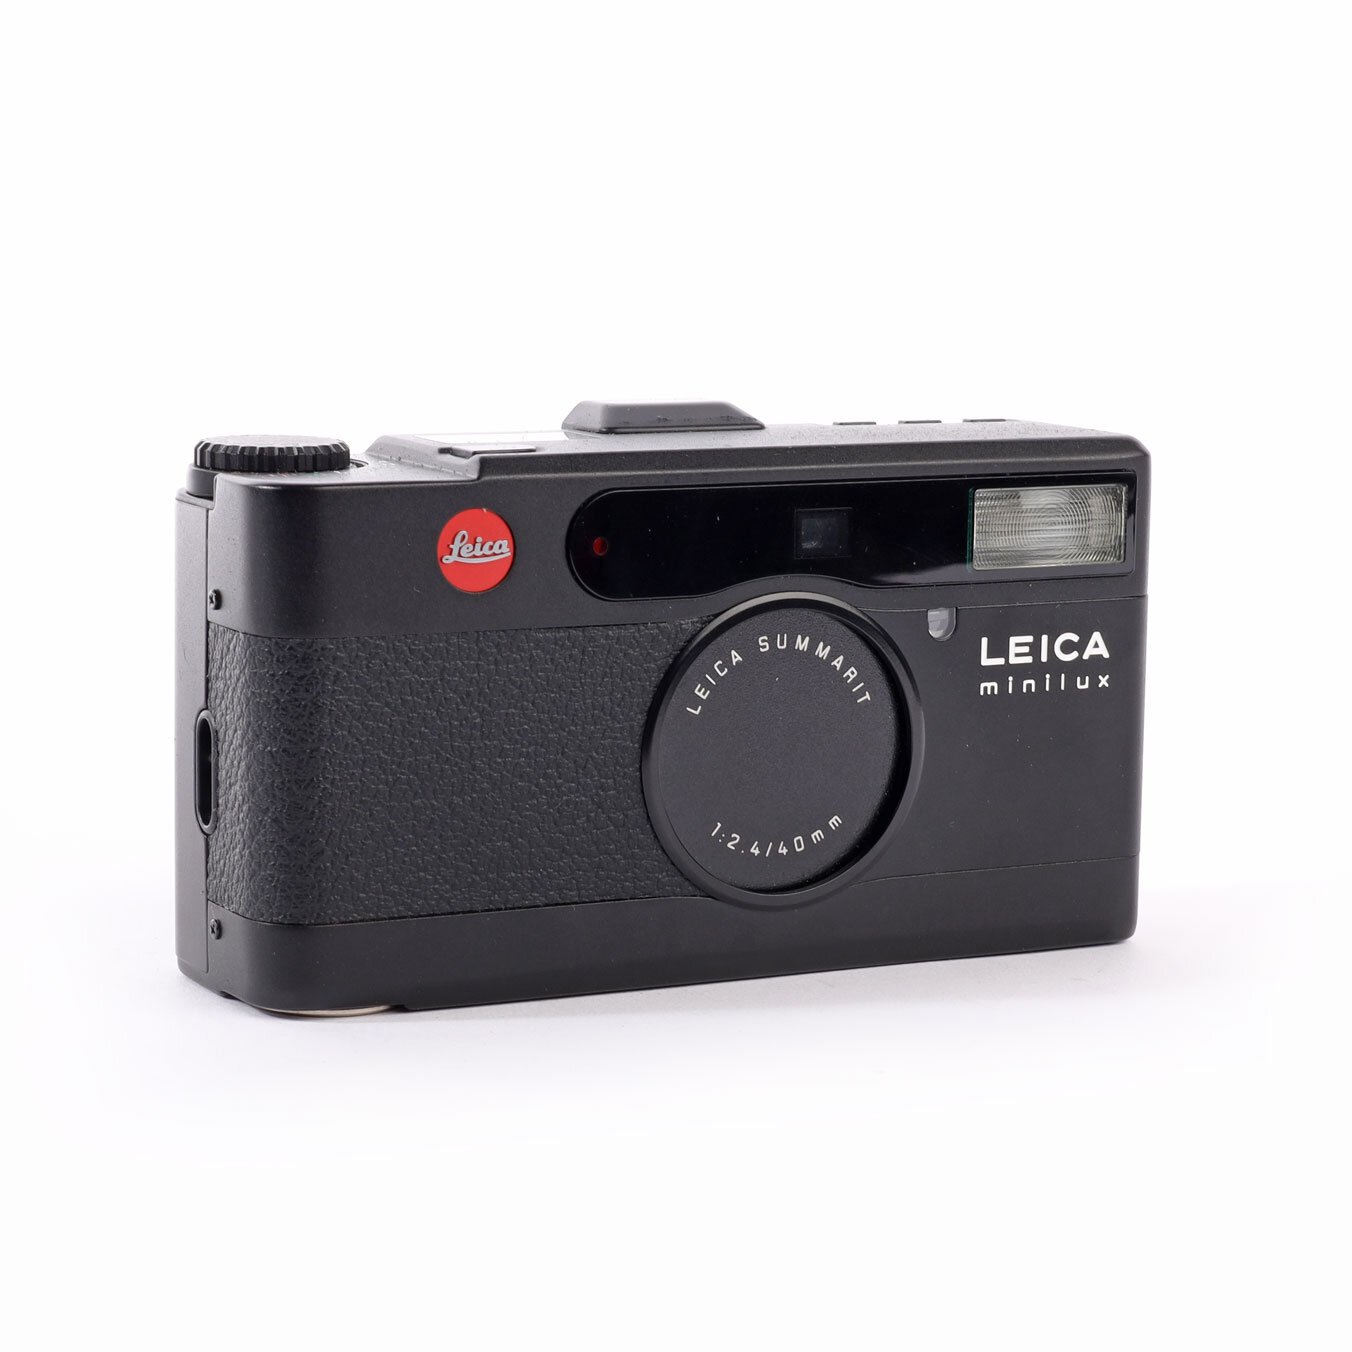 Leica Minilux Black Summarit 2.4/40mm Databack